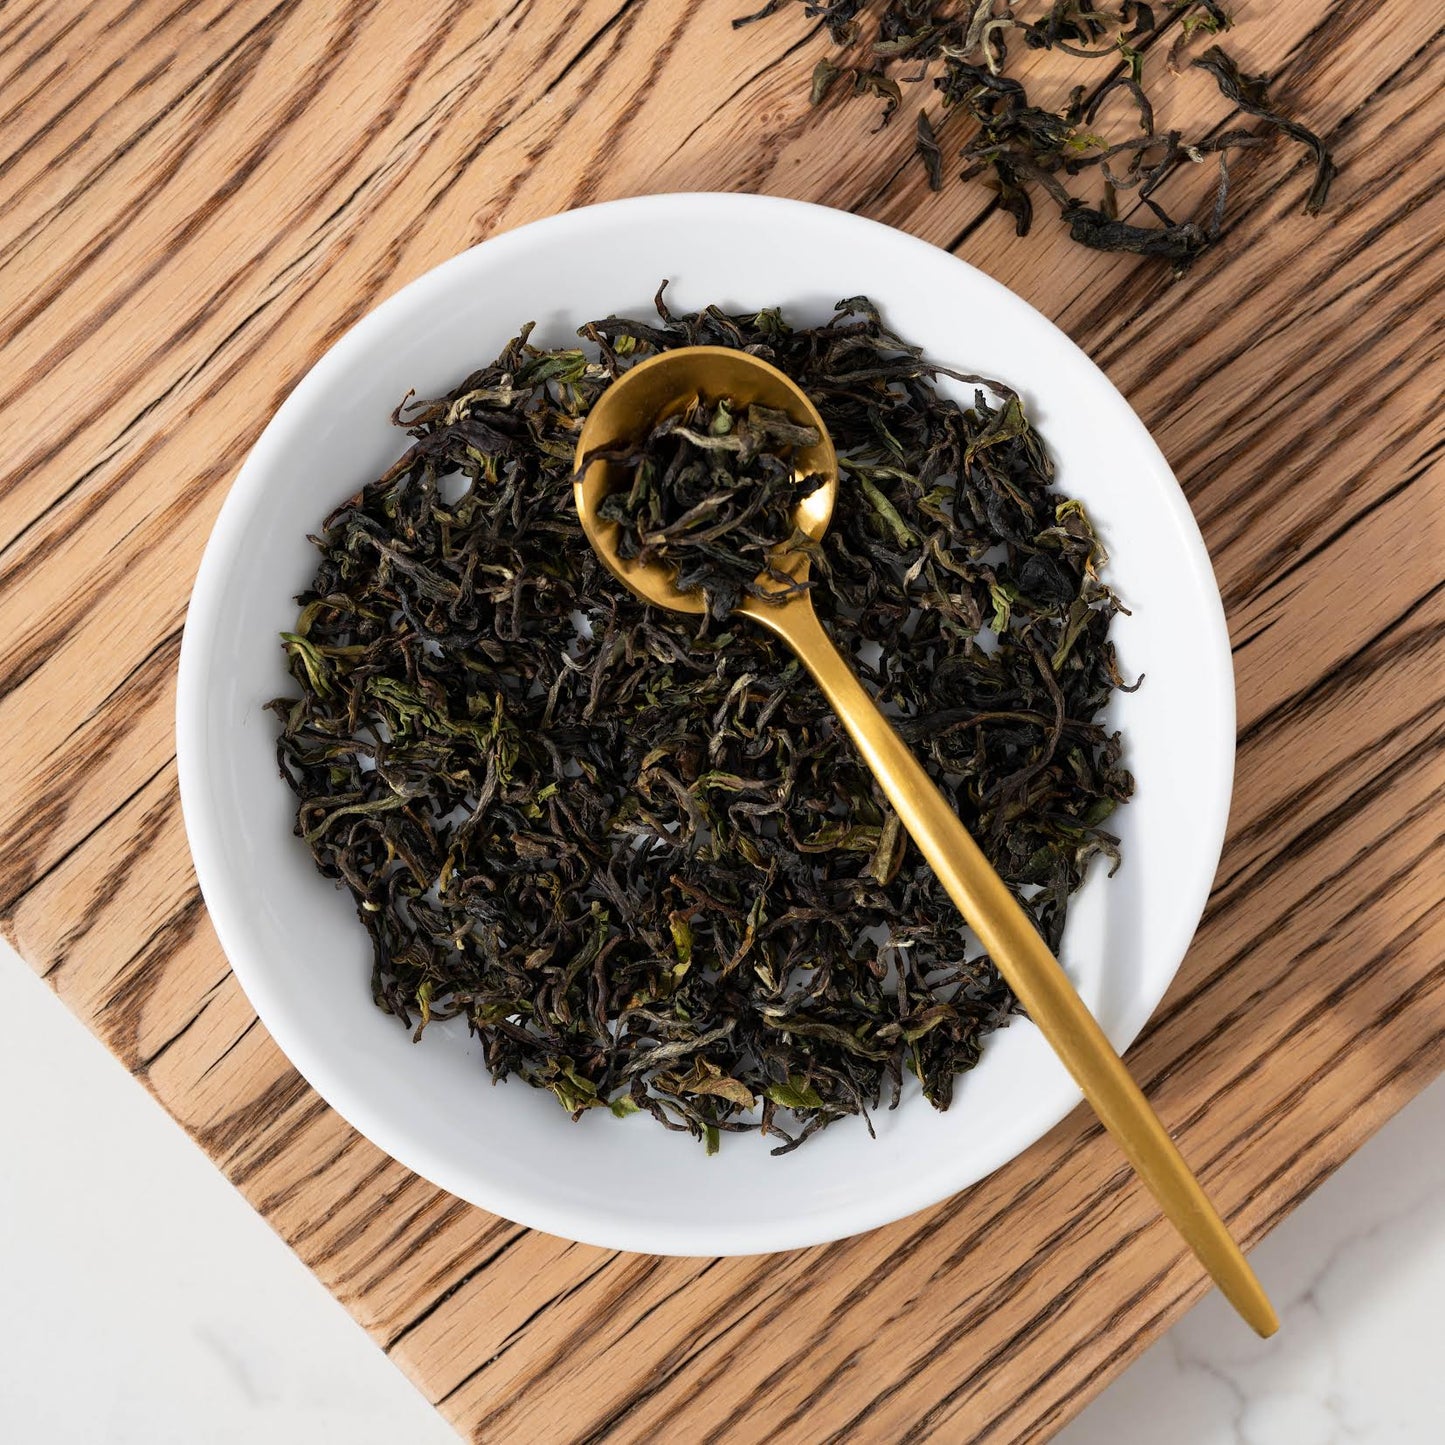 2024 Organic Avongrove First Flush Darjeeling Black Tea